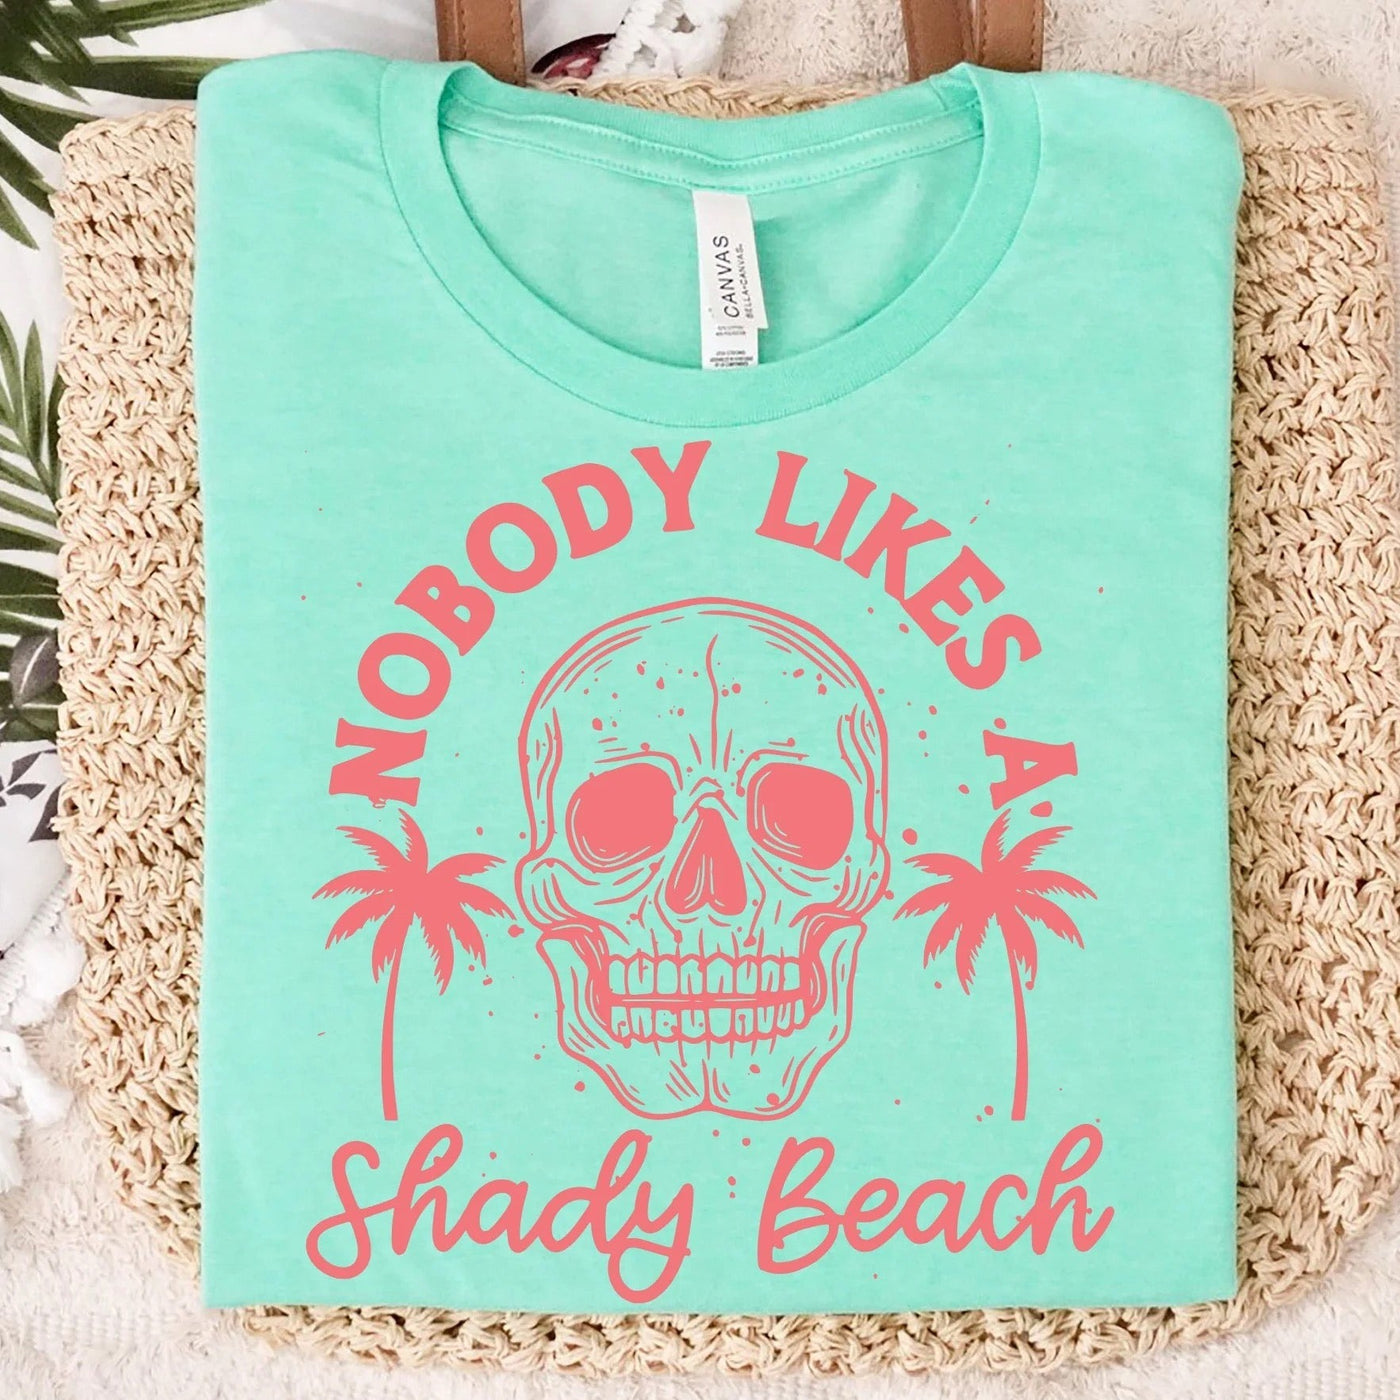 "Nobody Likes a Shady Beach" T-shirt (shown on "Mint")